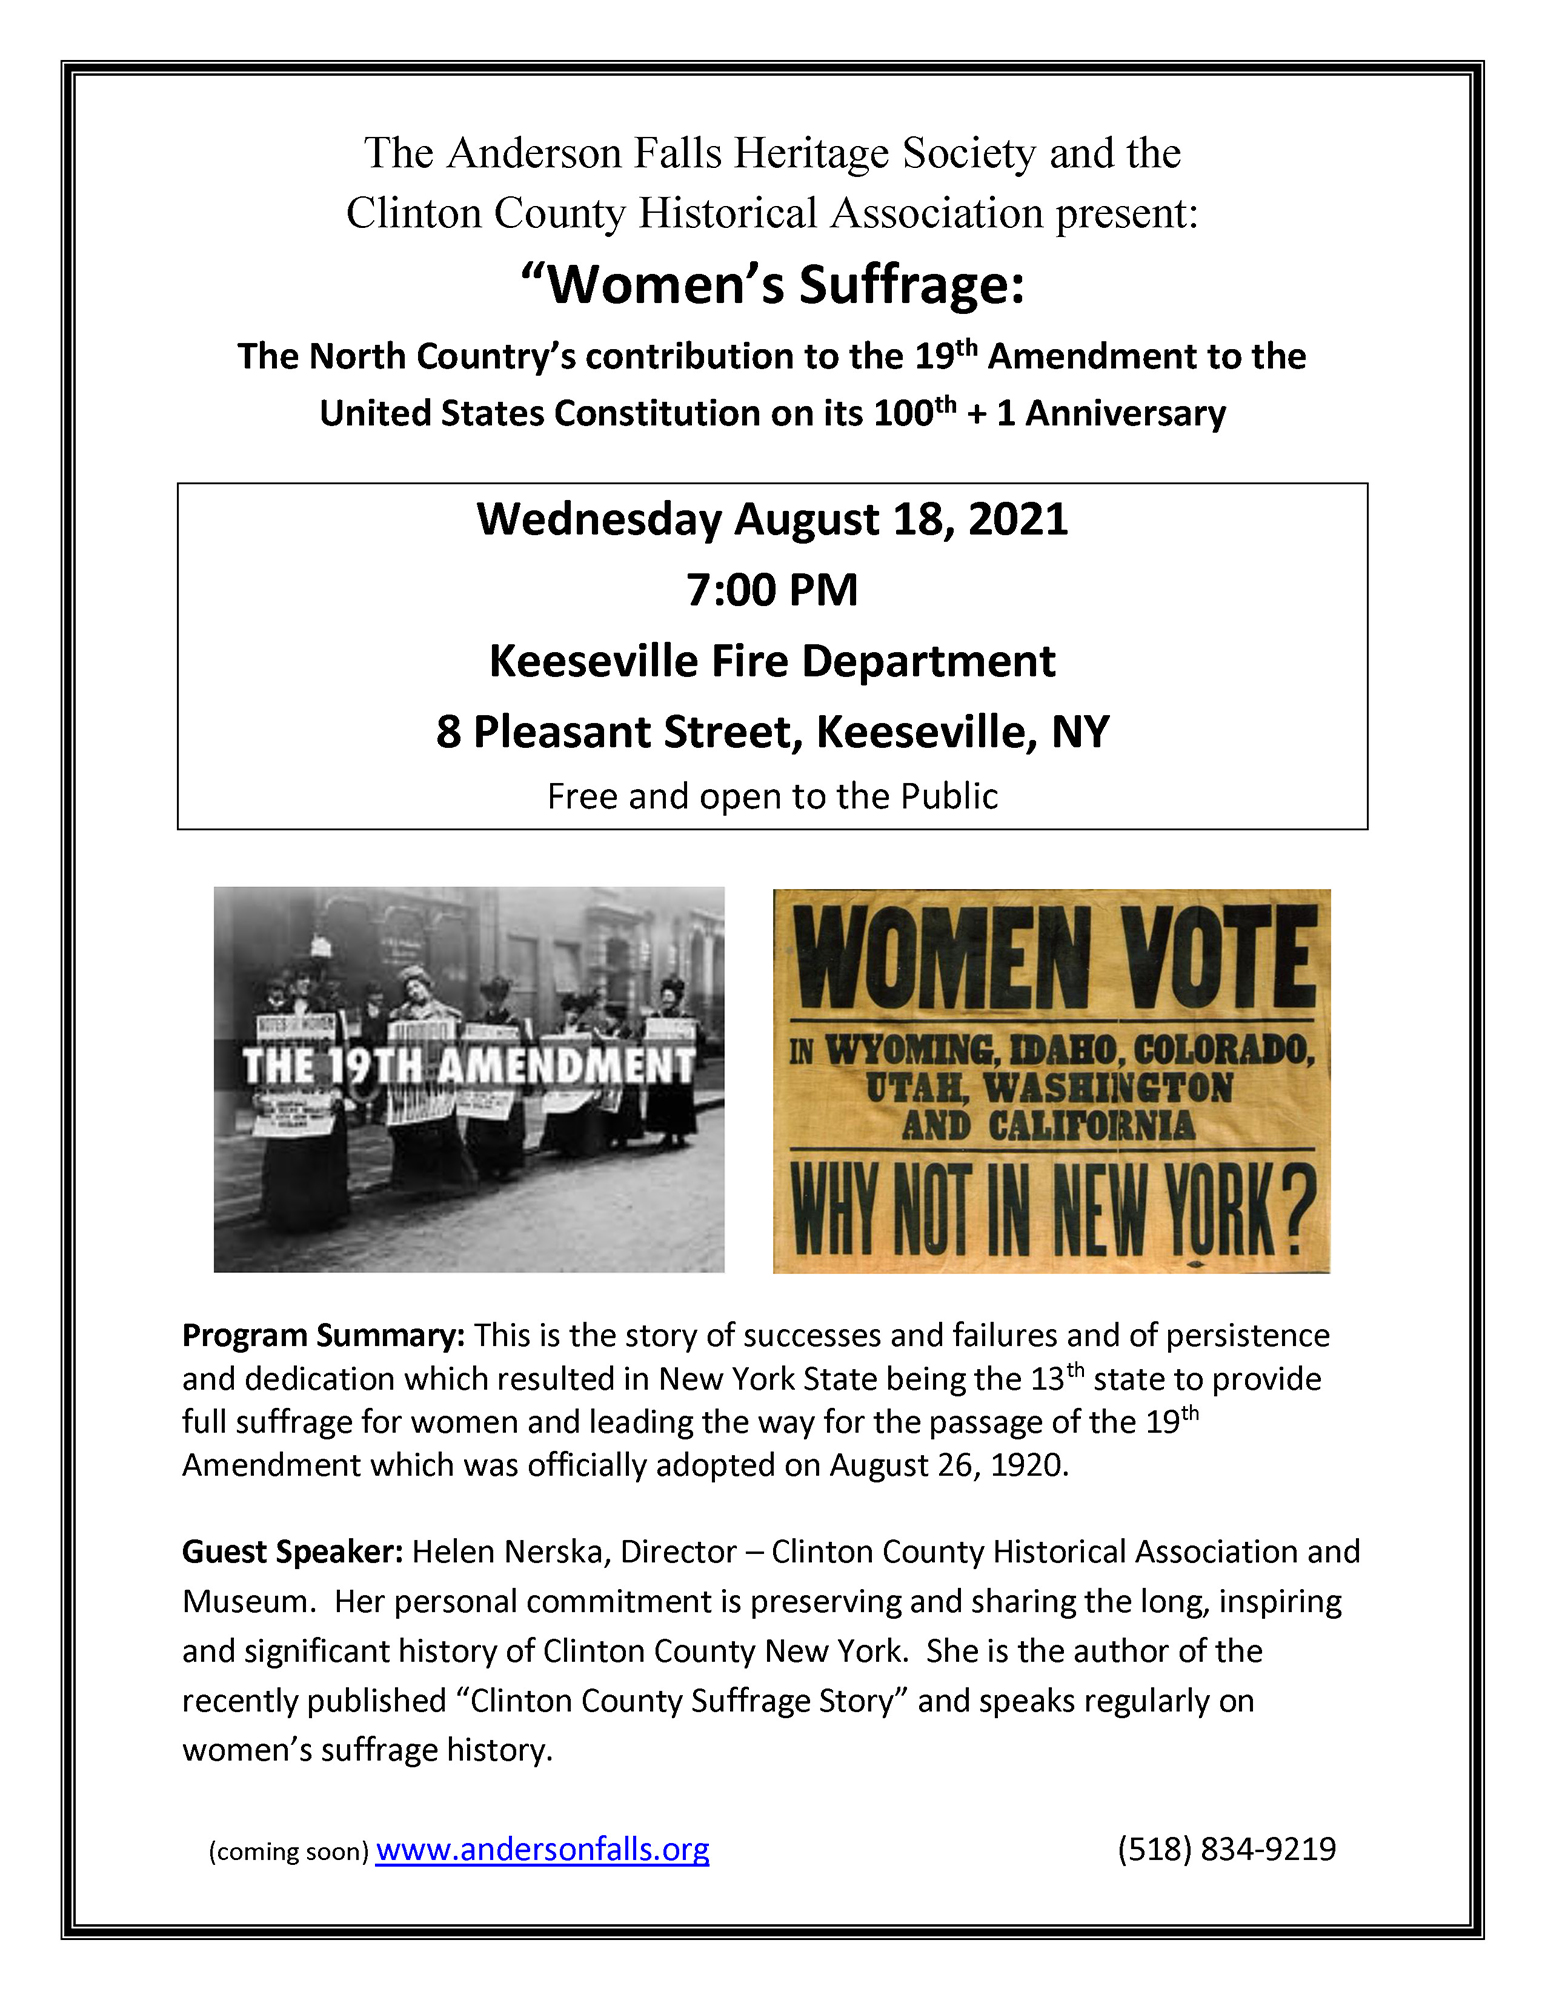 Women's Suffrage program flyer